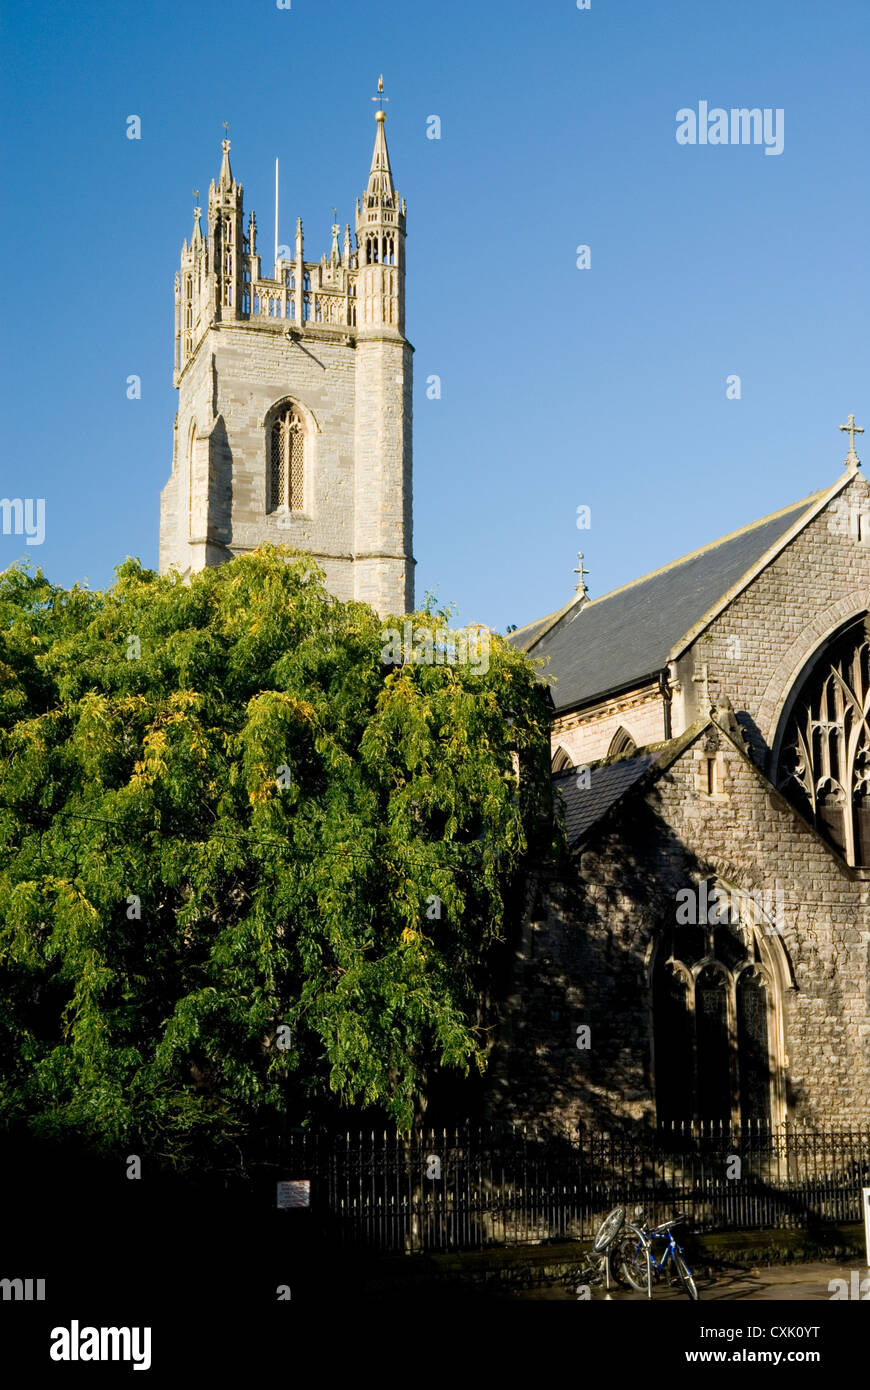 St Johns Church, Cardiff, Wales, UK. Stock Photo